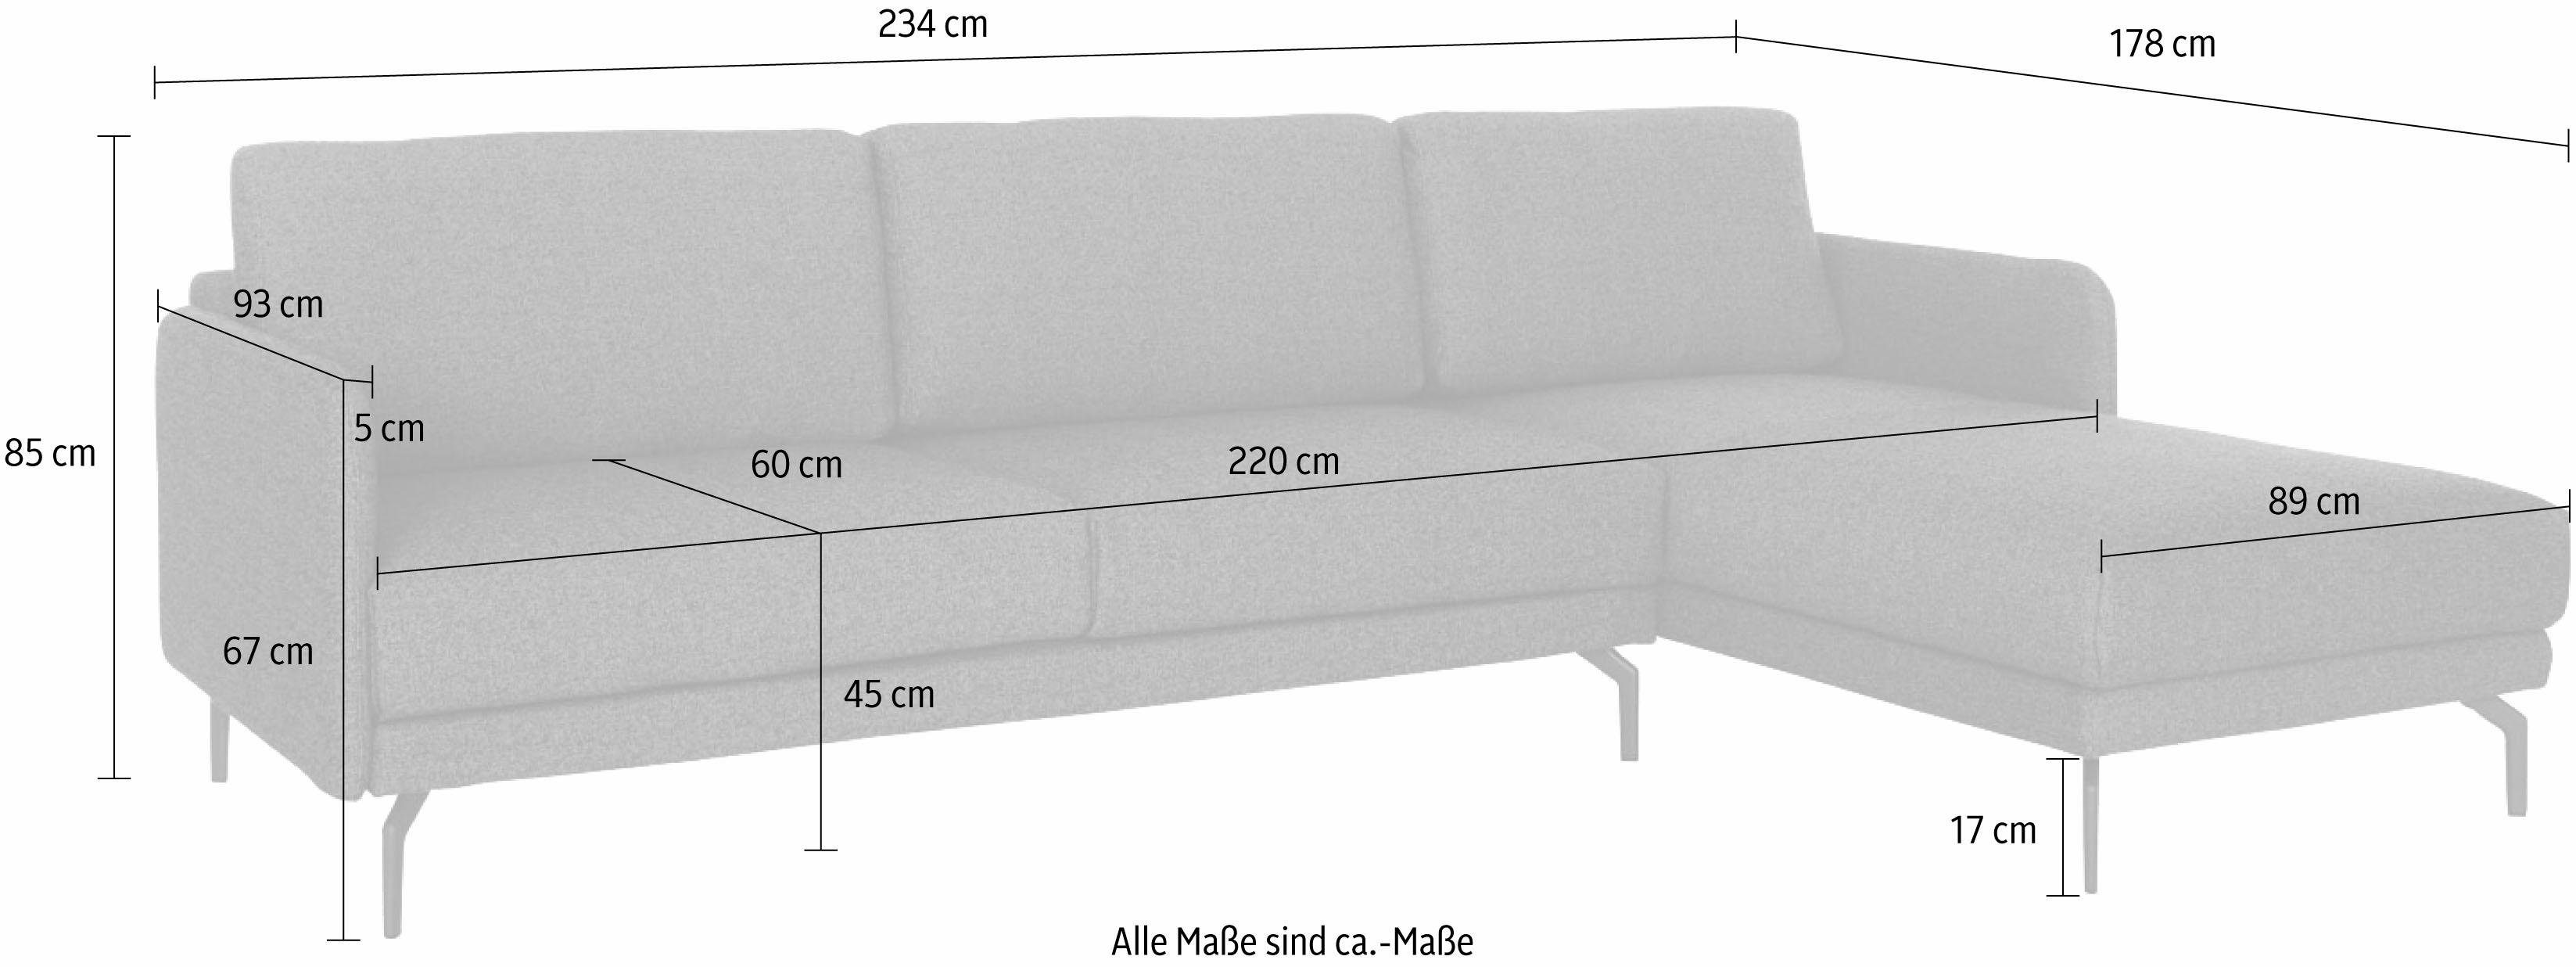 sofa cm, Alugussfüße Breite sehr Ecksofa in hs.450, 234 schmal, umbragrau Armlehne hülsta